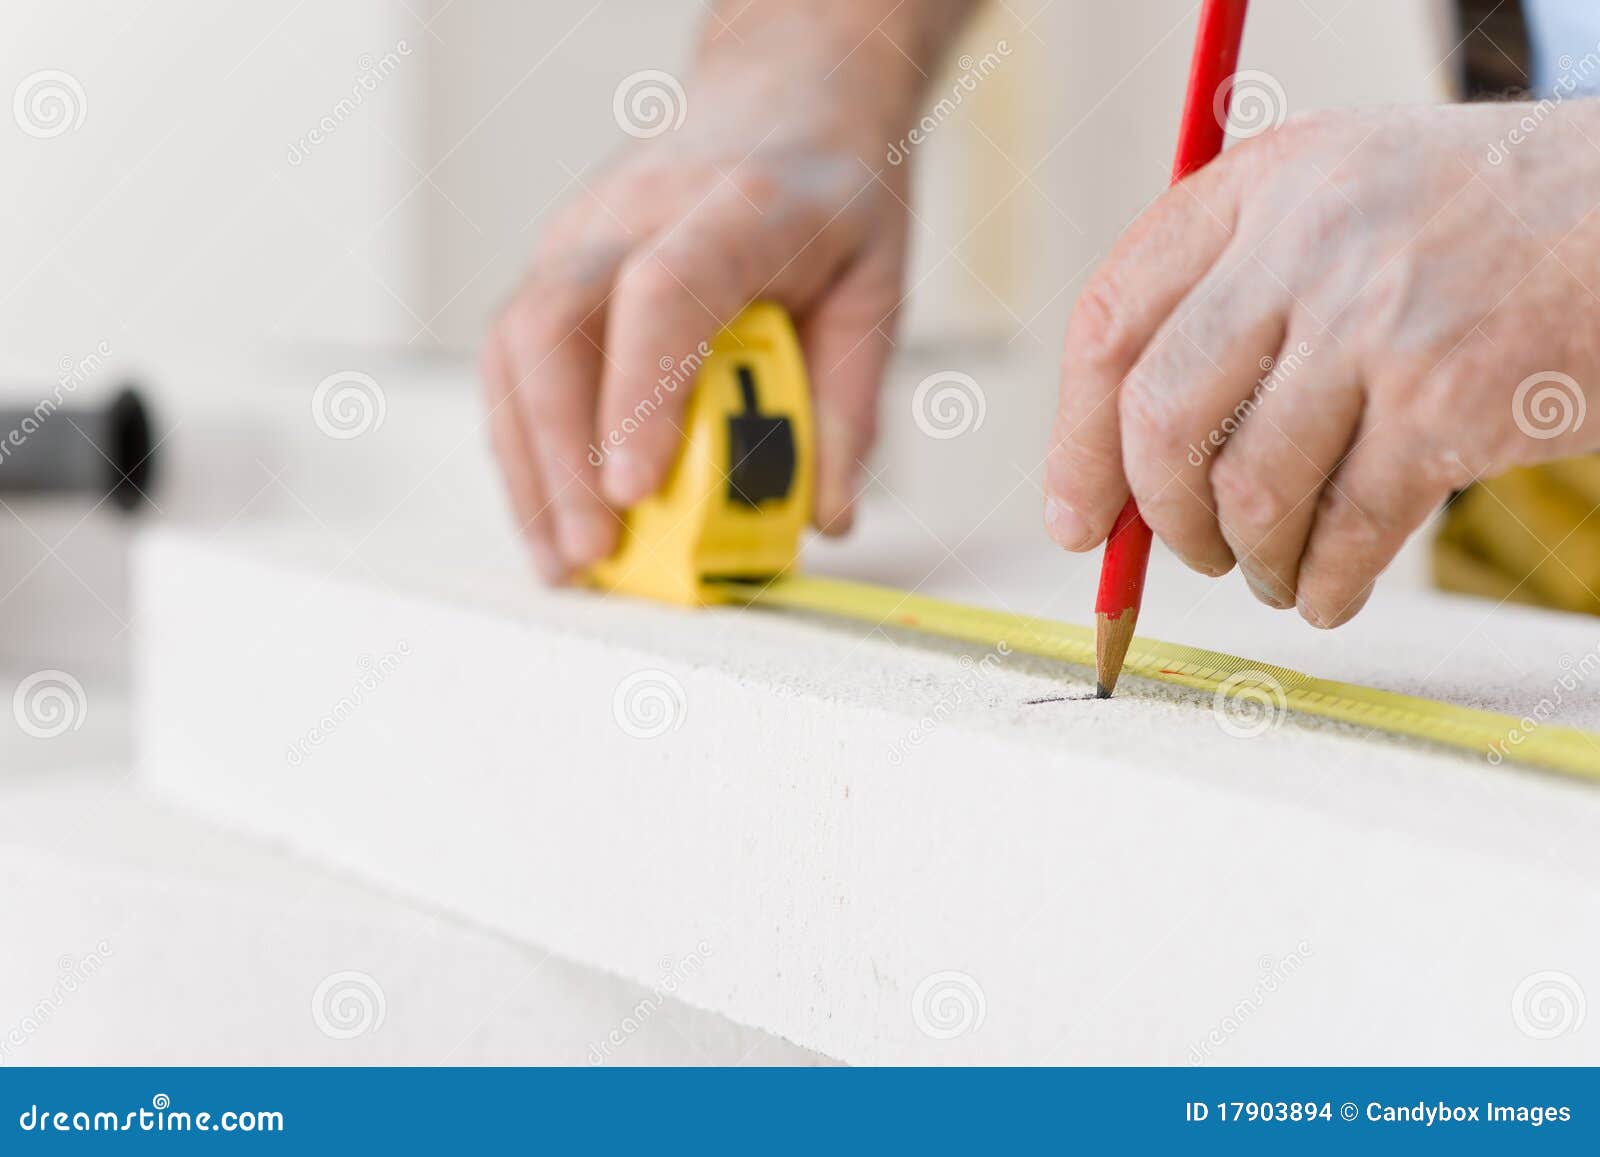 home improvement - handyman measure porous brick